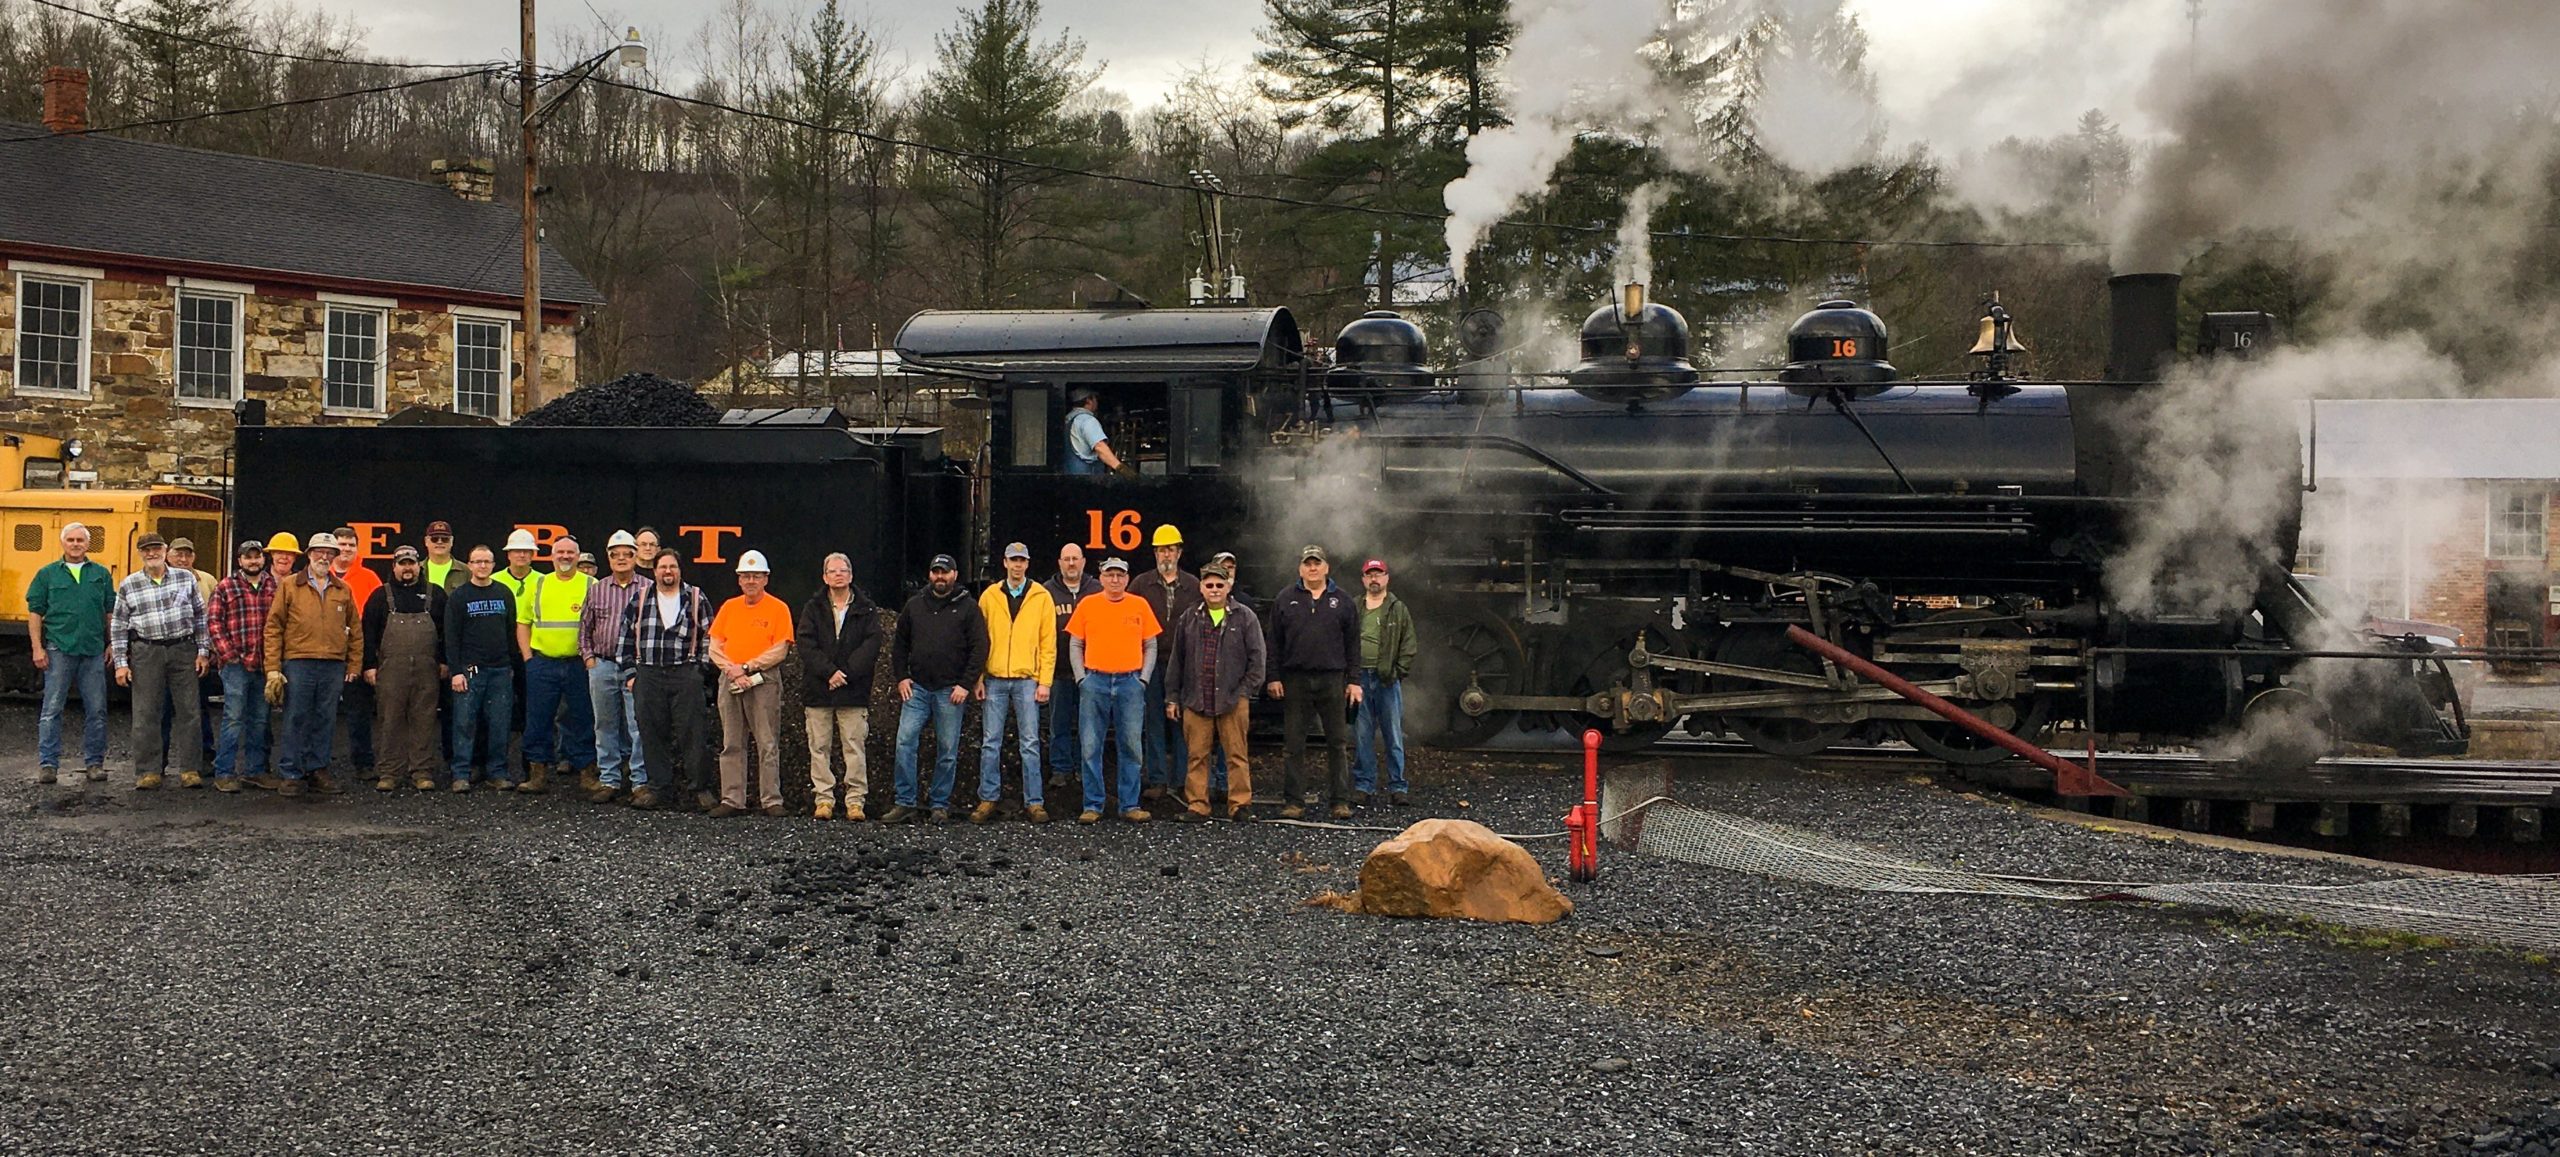 FEBT Restoration Crew with Locomotive #16